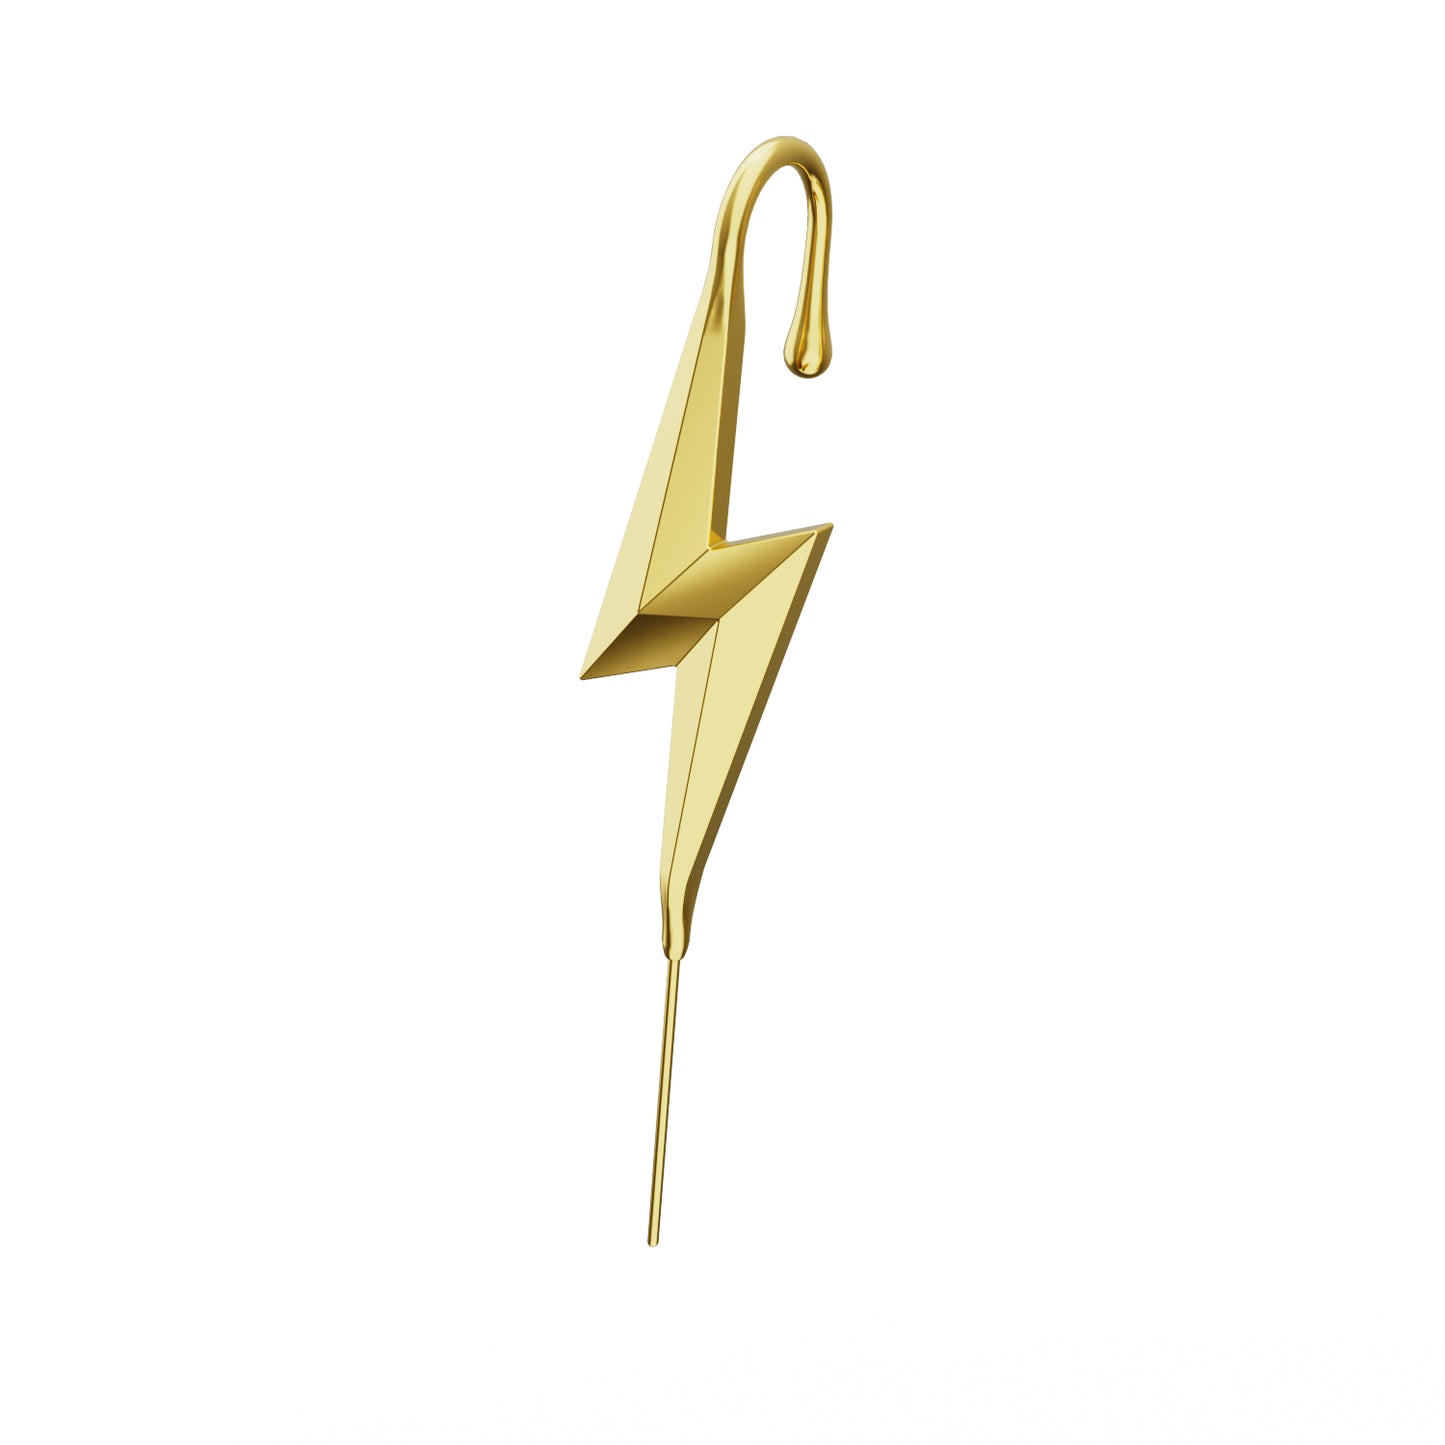  SUCIOWEAR OFFICIAL Gold Foiled Lightning Bolt